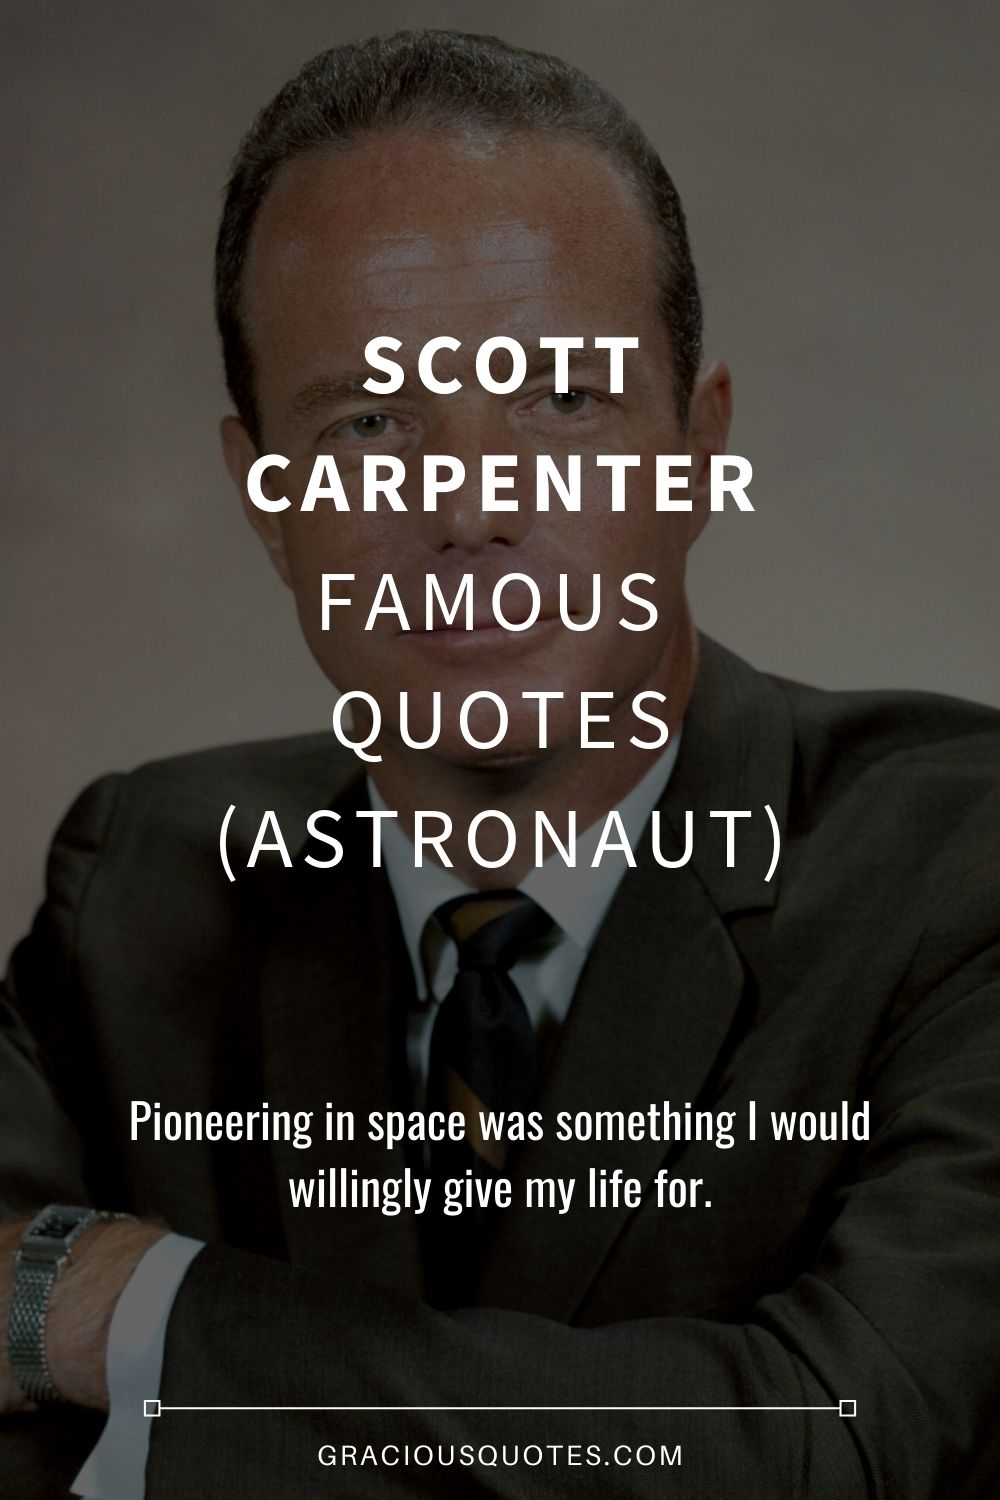 Scott Carpenter Famous Quotes (ASTRONAUT) - Gracious Quotes